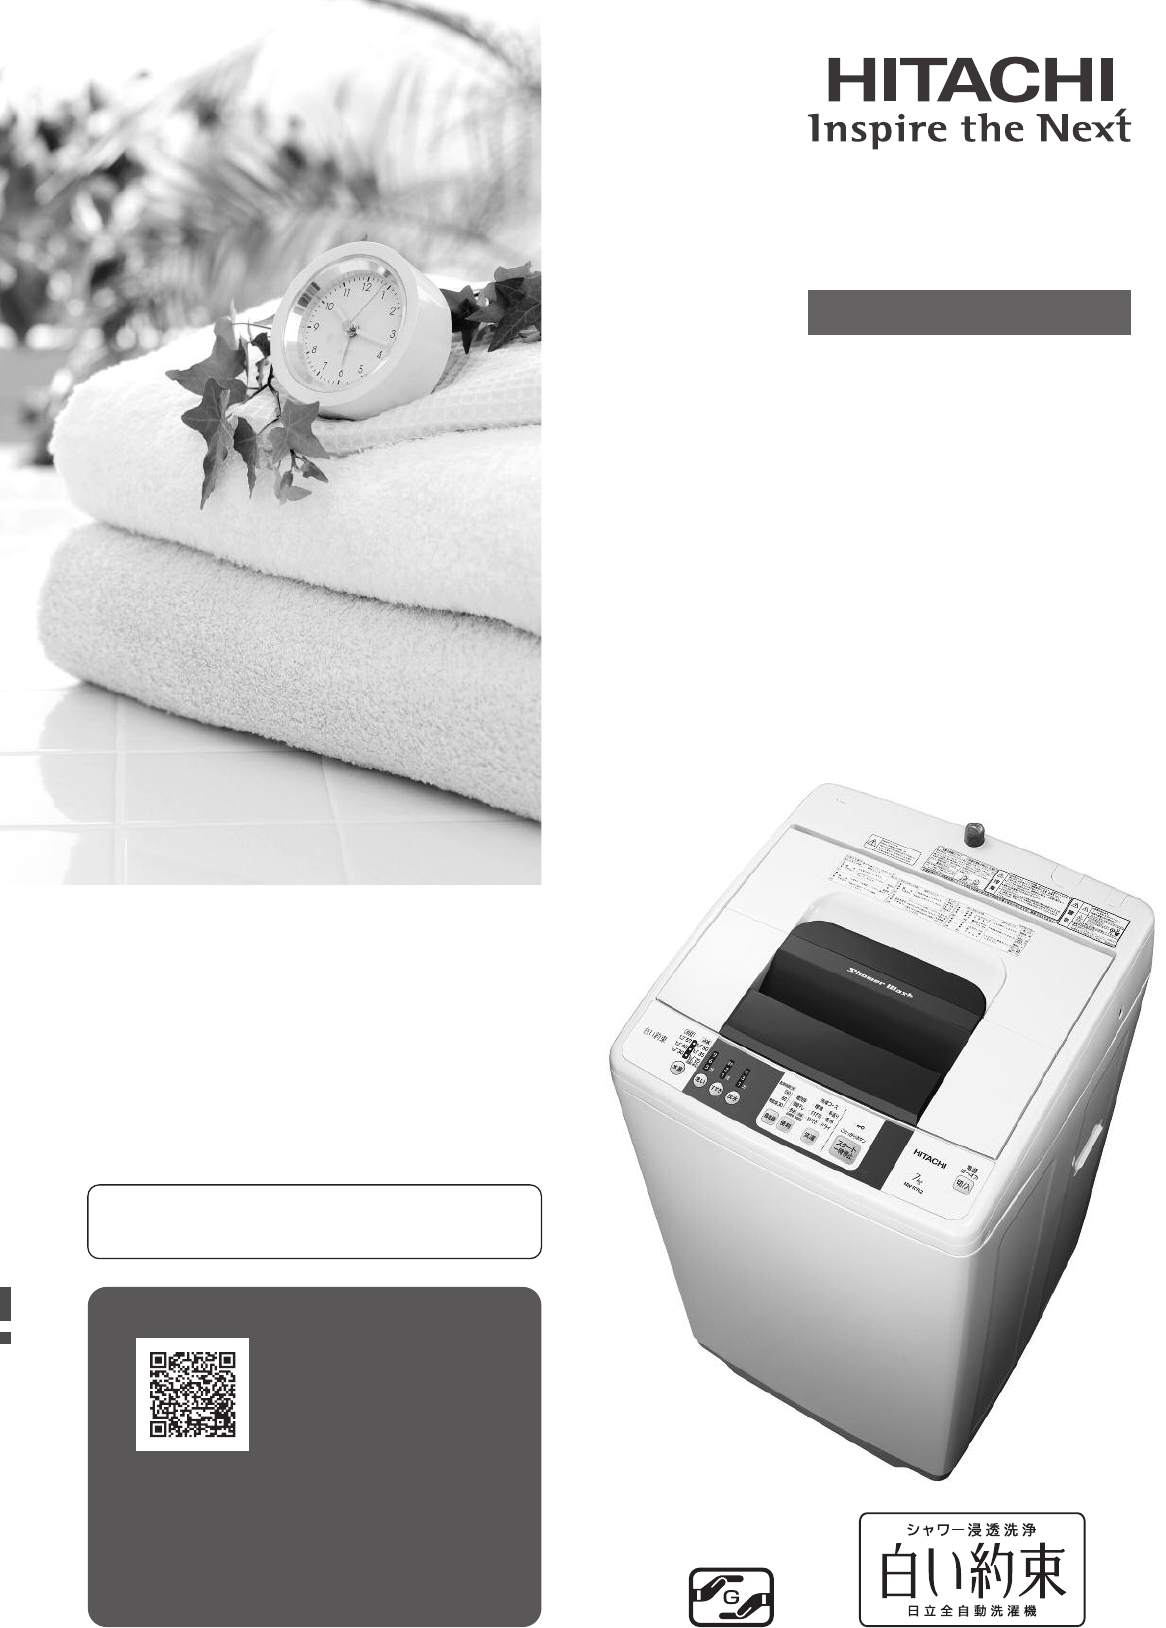 M22928b-49) HITACHI 日立 全自動電気洗濯機 白い約束 NW-R702 - 生活家電